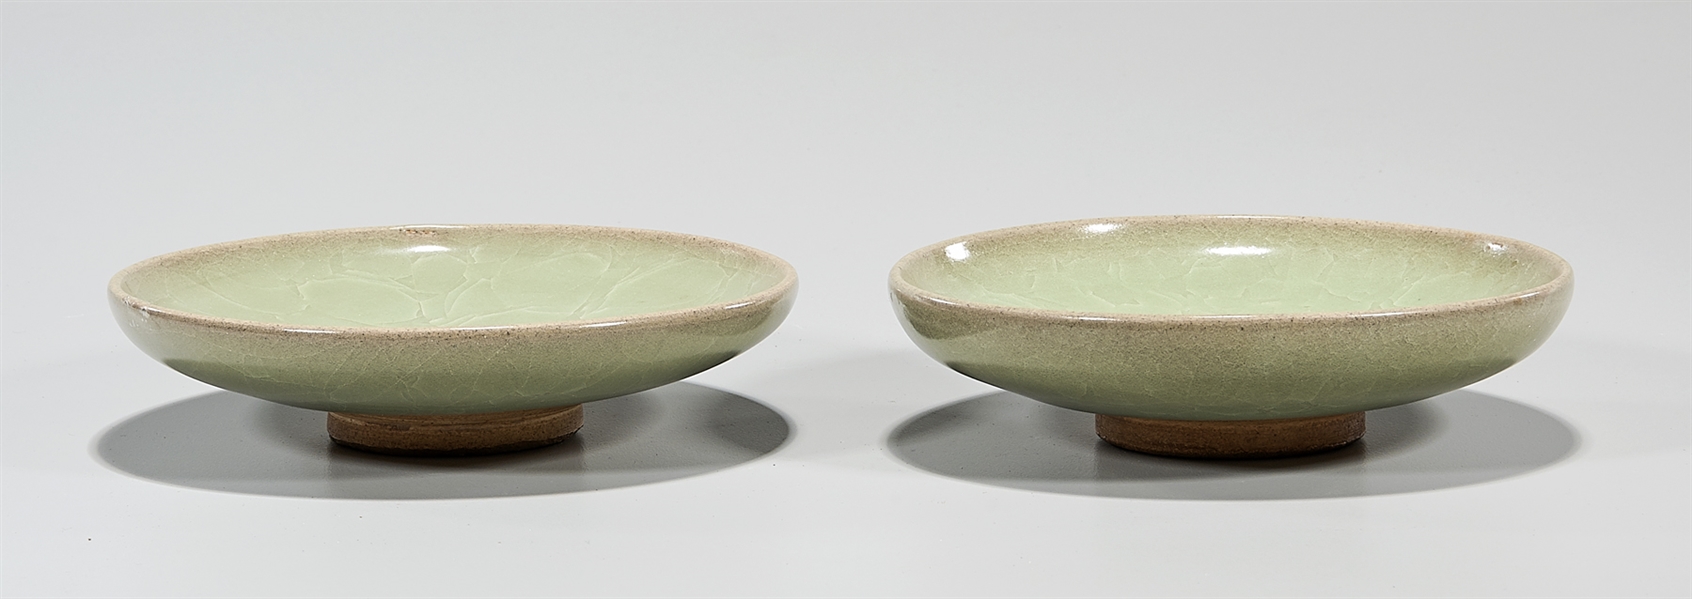 Pair of Chinese celadon glazed